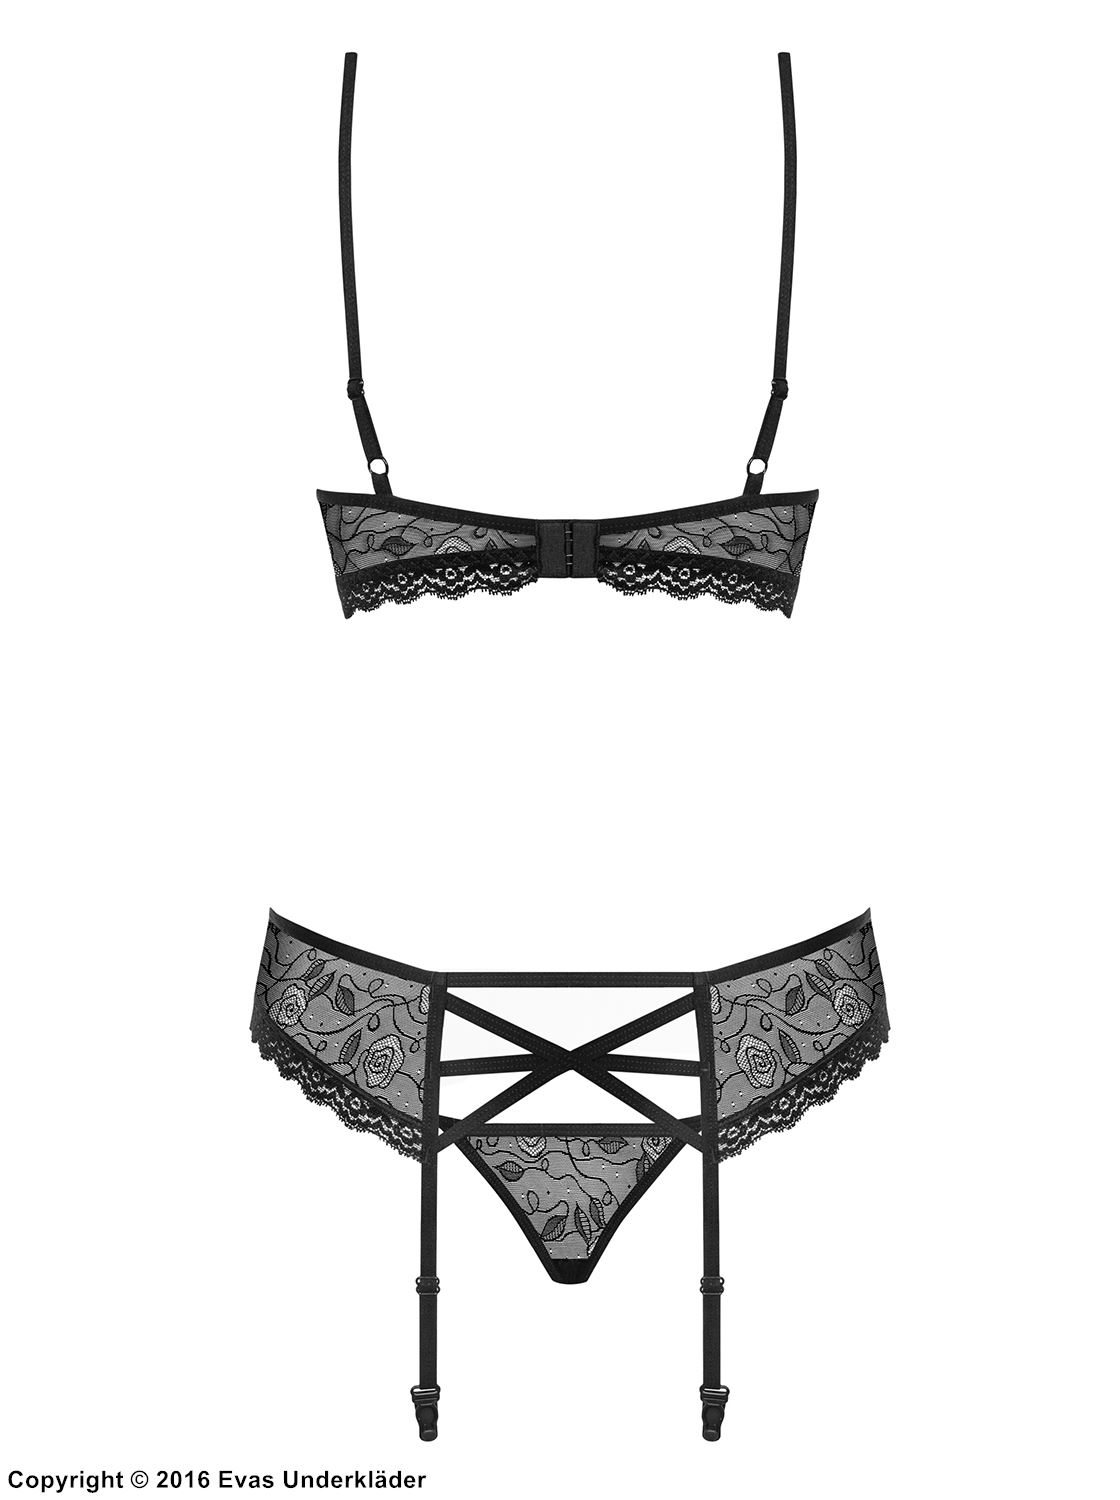 Lingerie set, rhinestones, straps over bust, lace edge, garter belt